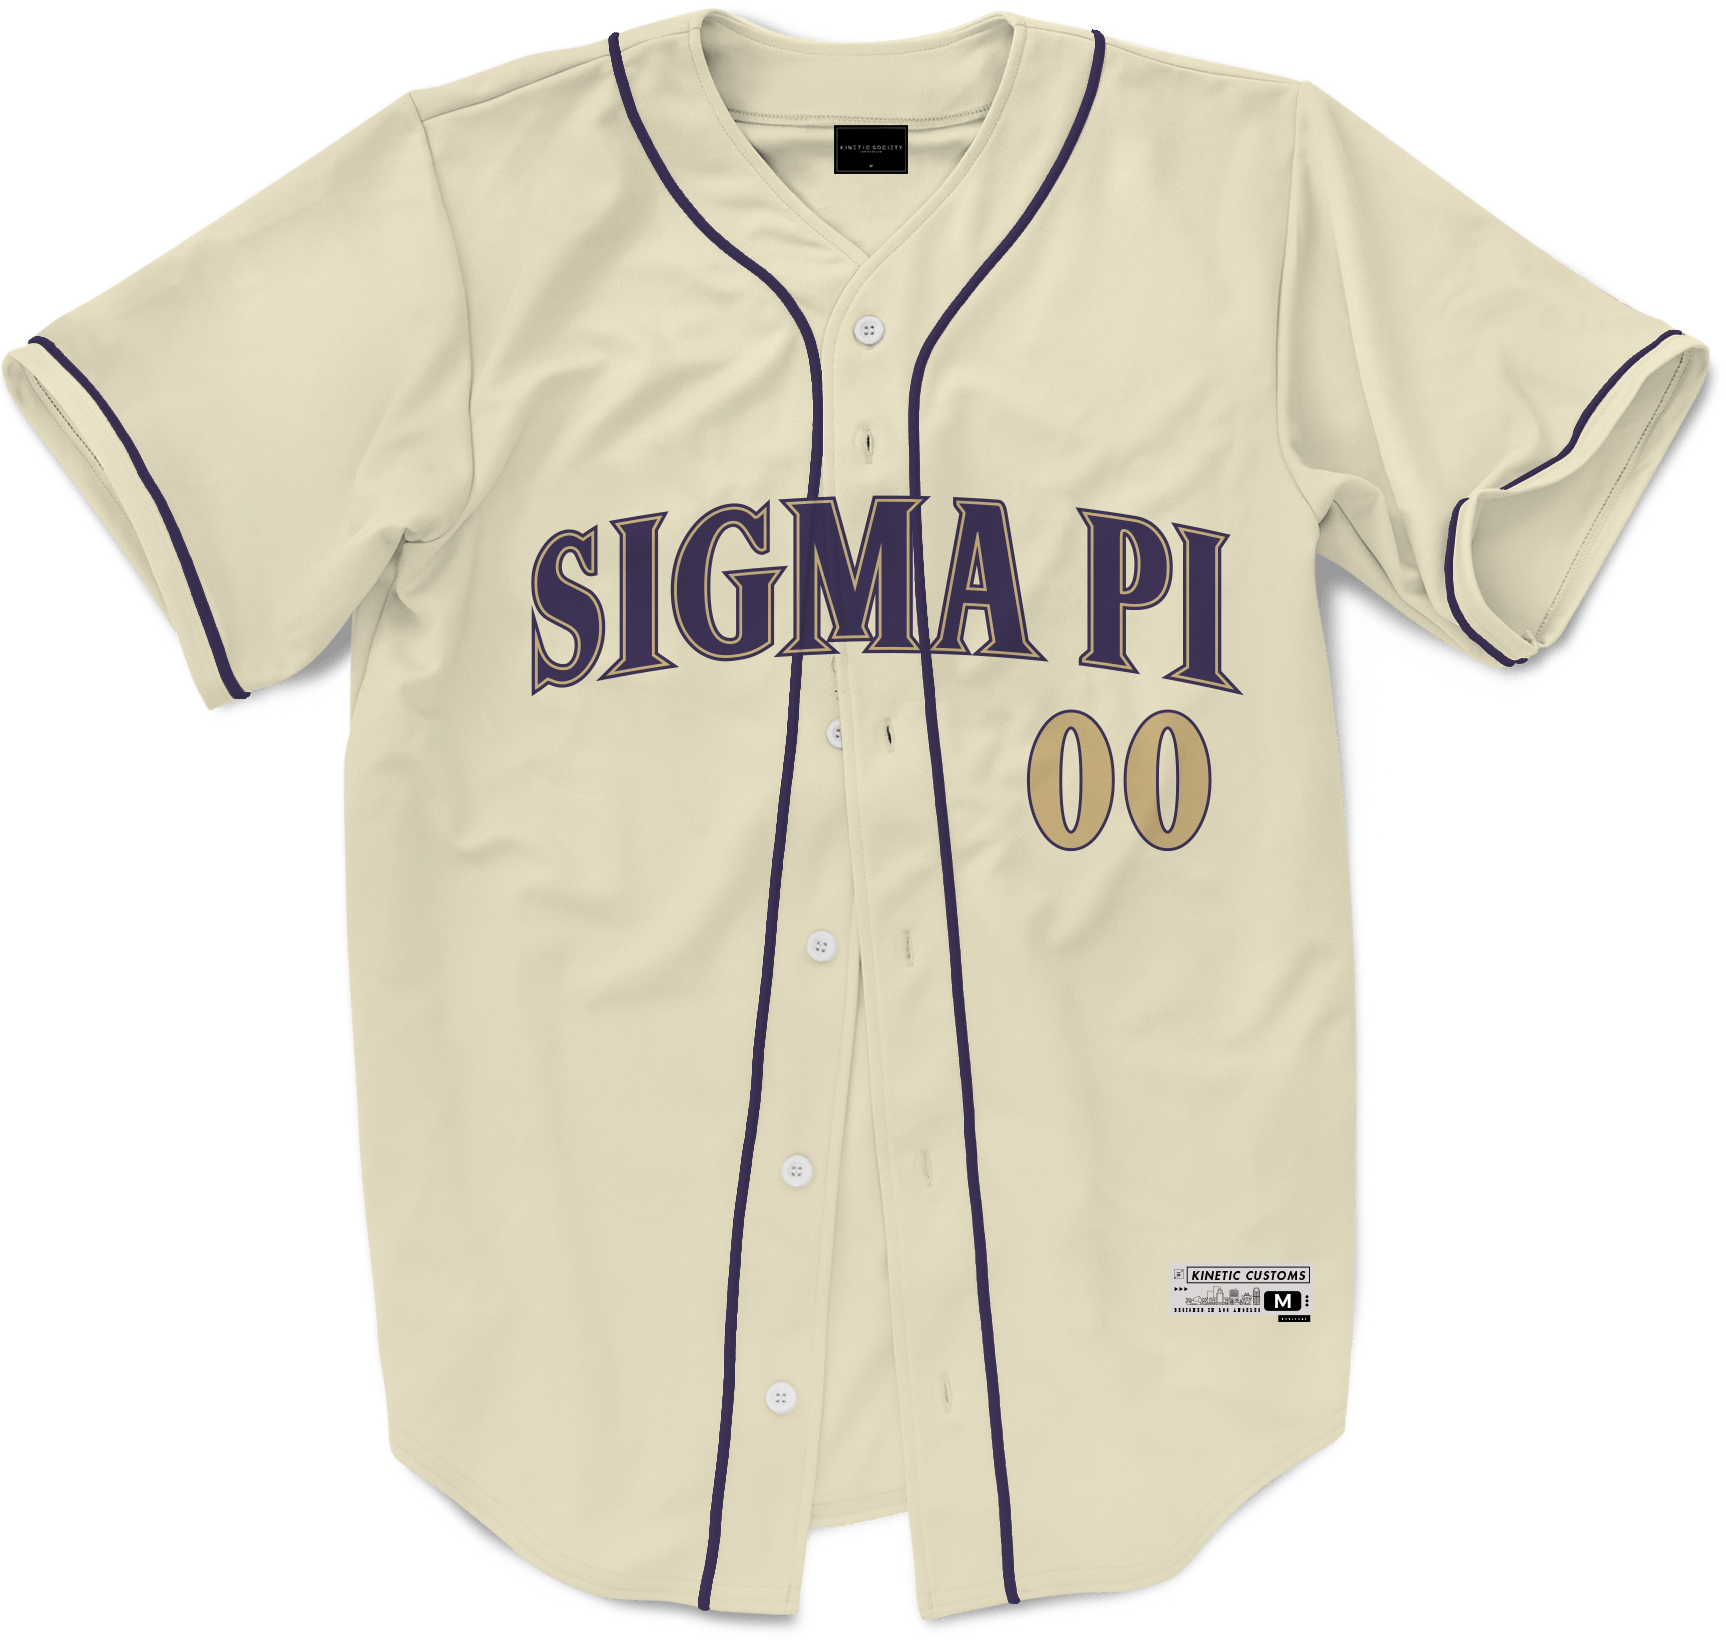 Sigma Pi - Cream Baseball Jersey Premium Baseball Kinetic Society LLC 